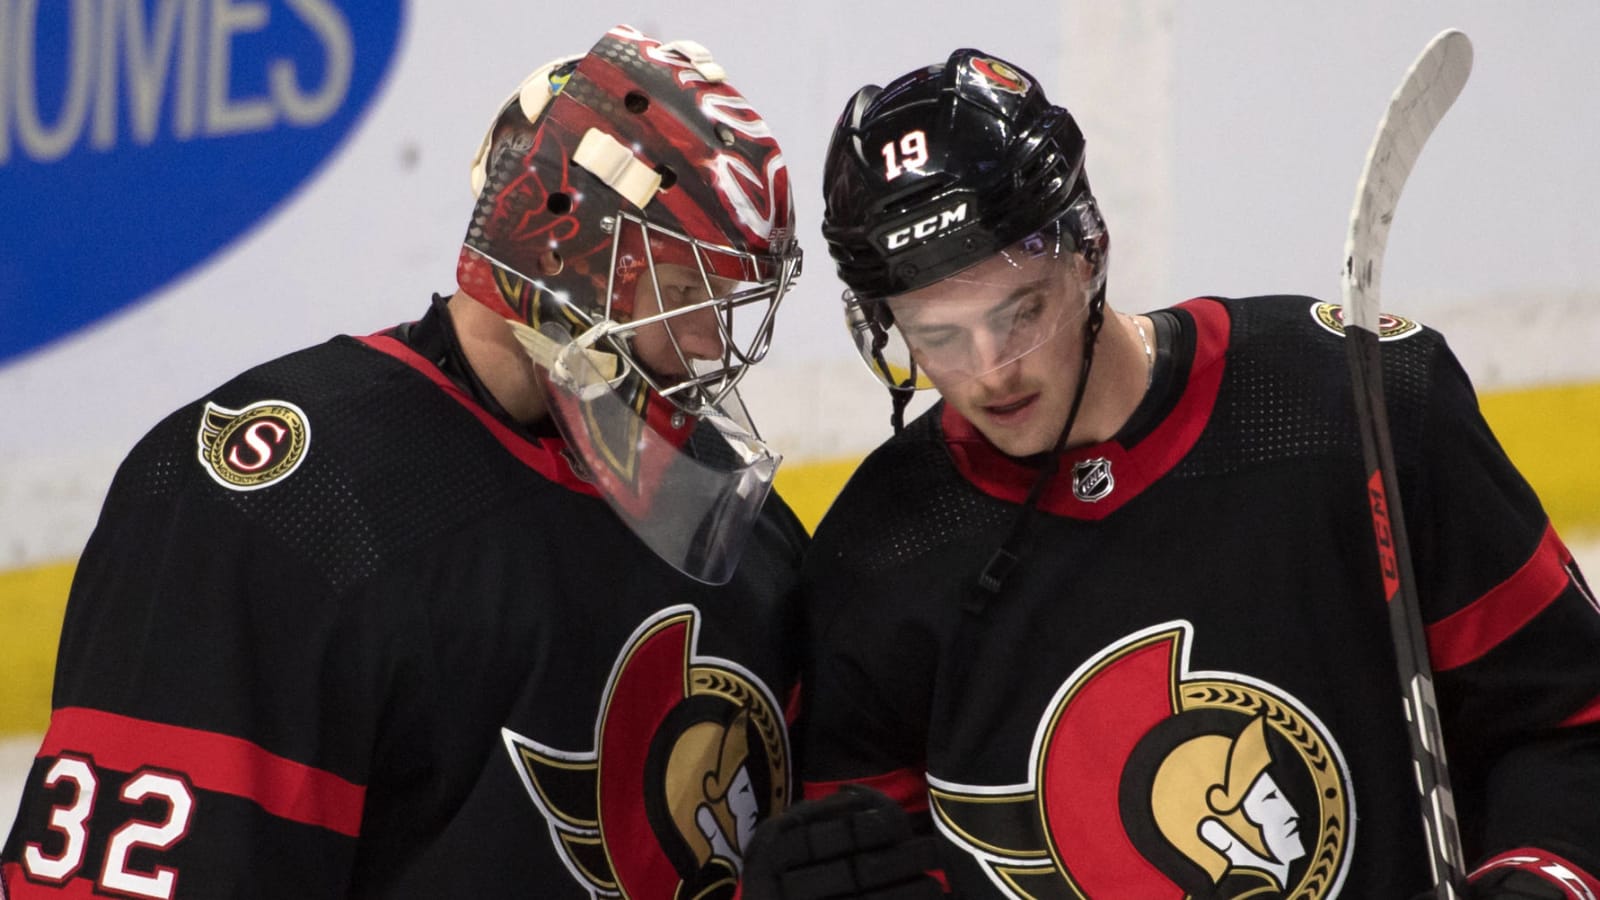 Report: NHL expected to postpone next three Senators games amid COVID outbreak